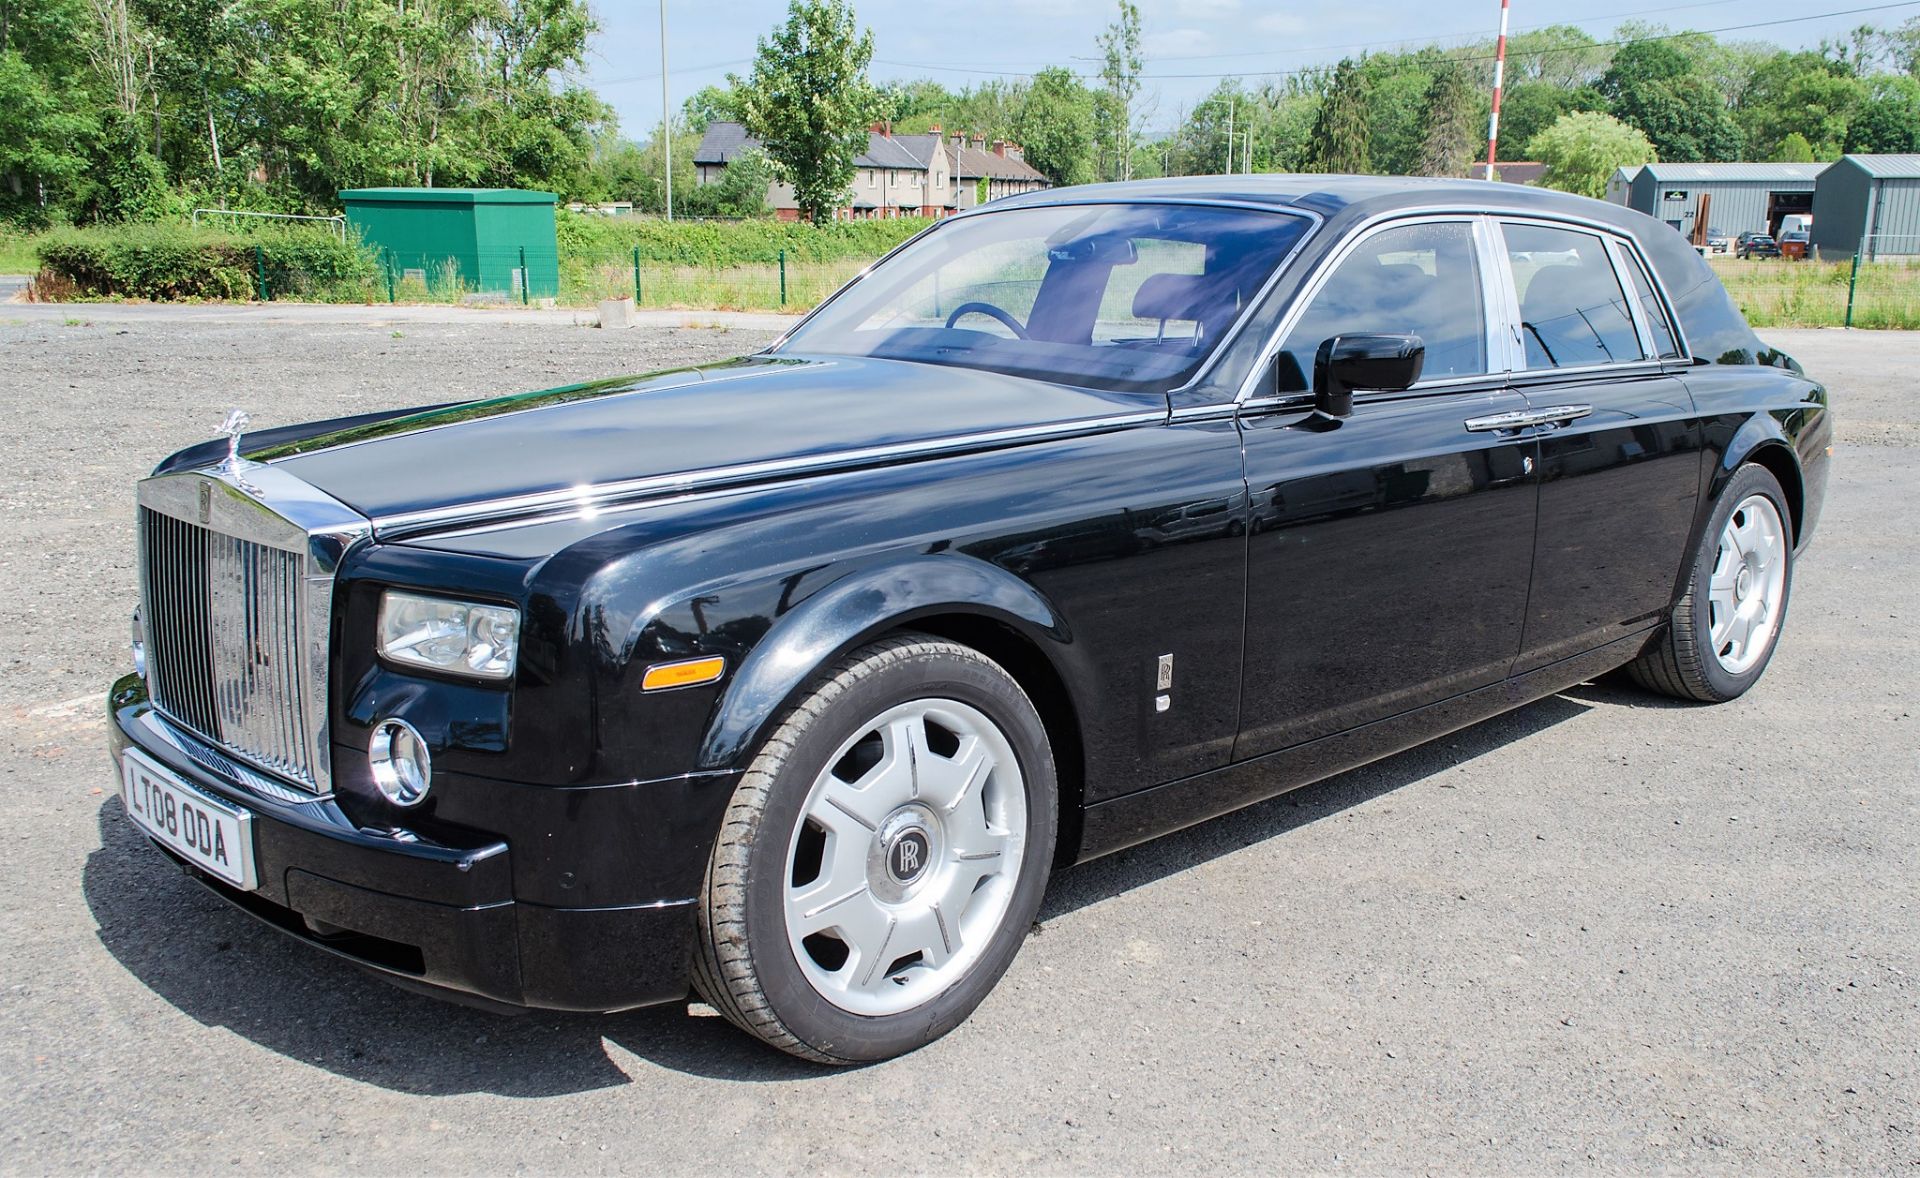 Rolls Royce Phantom VII 6.75 litre petrol 4 door saloon car  Reg No: LT 08 ODA Date of Registration: